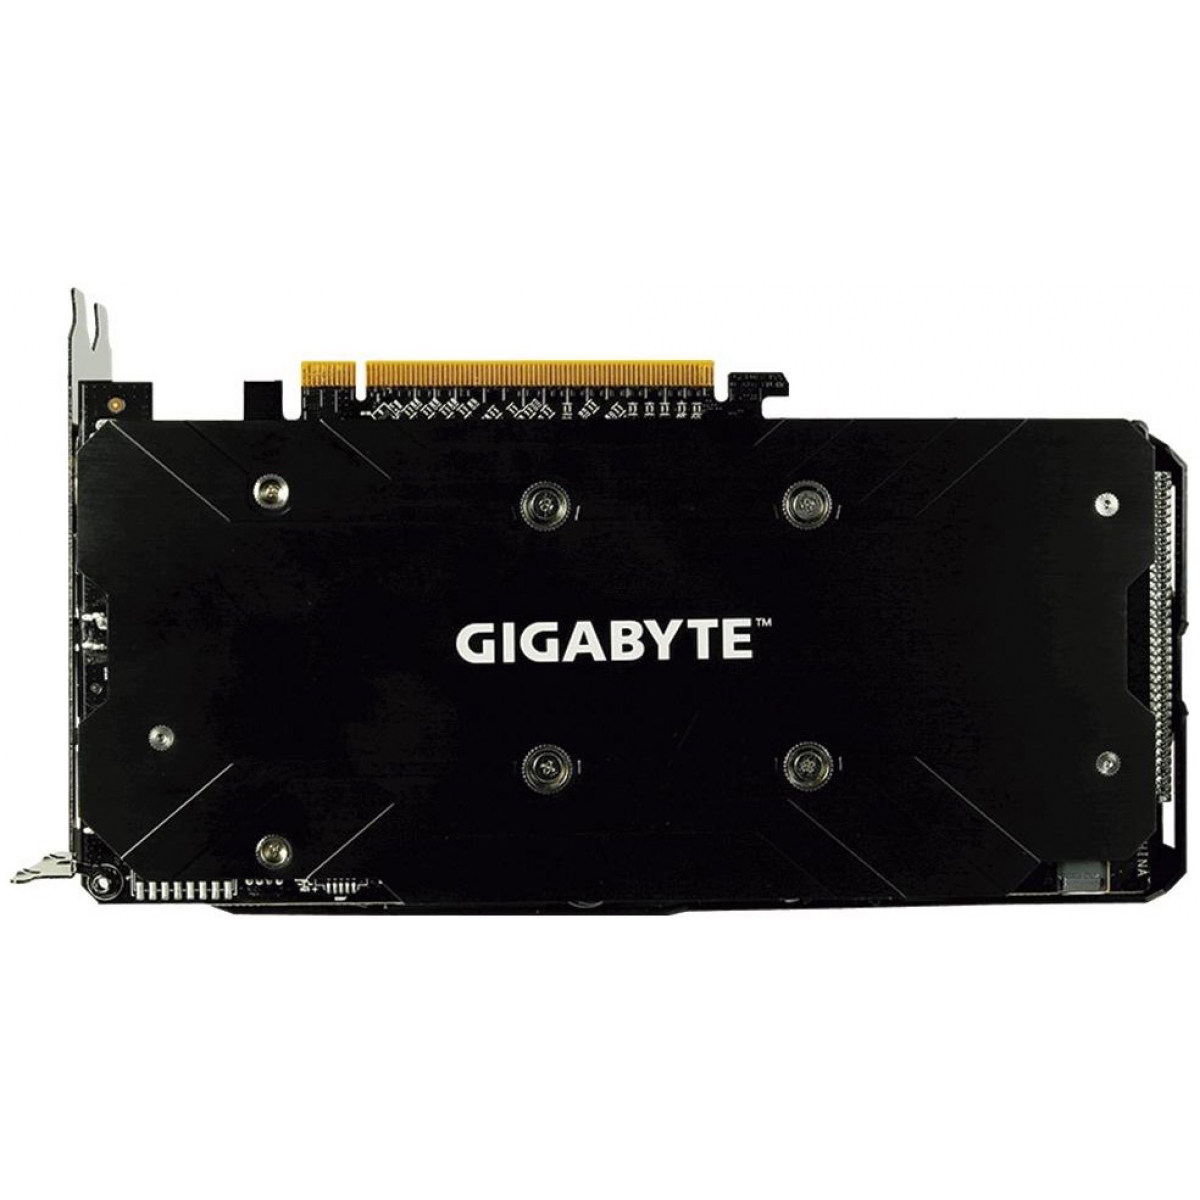 Placa de Vídeo Gigabyte Radeon RX 570 Gaming Dual, 8GB GDDR5, 256Bit, GV-RX570GAMING-8GD